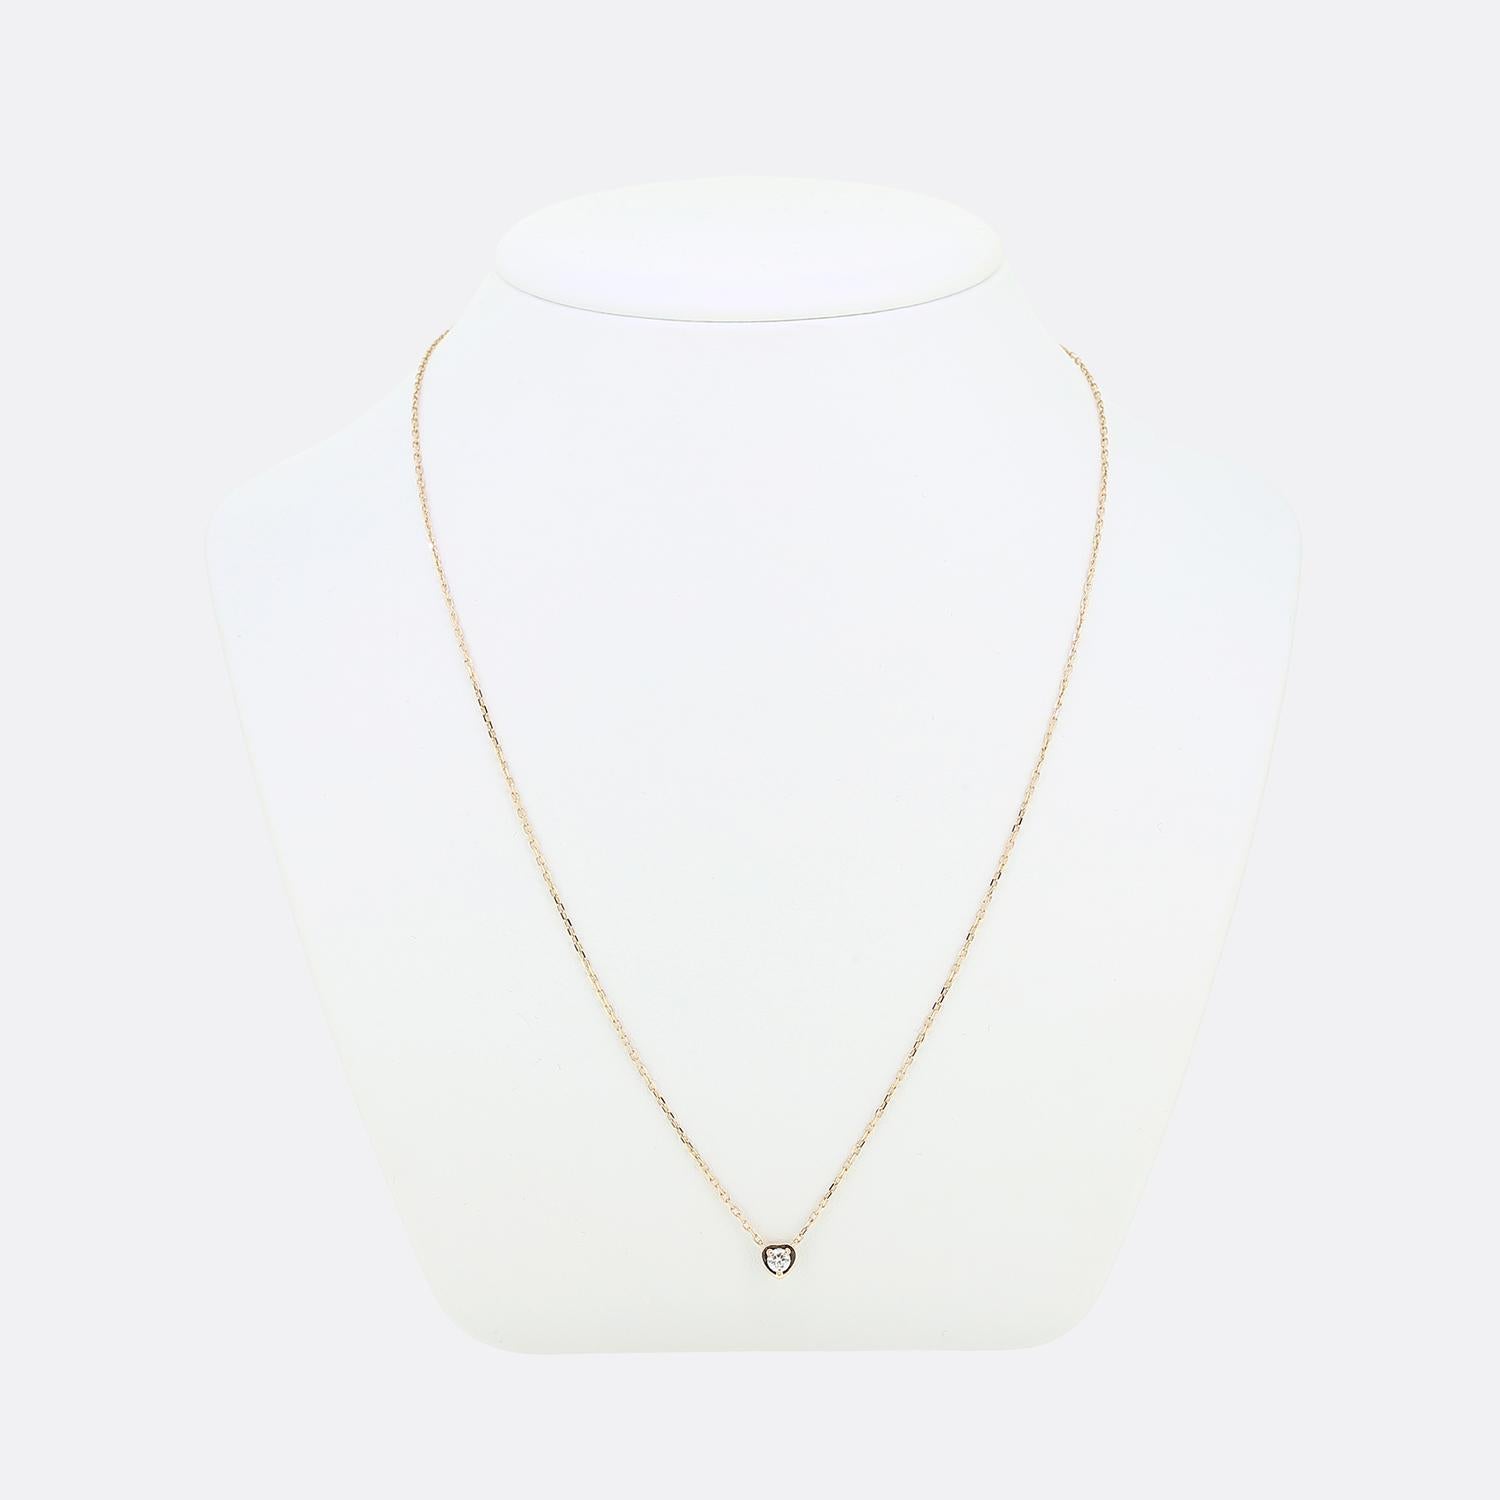 Japan Used Necklace] Cartier Diamant Leger Necklace Lm B7215600 750 K18Pg  Women | eBay